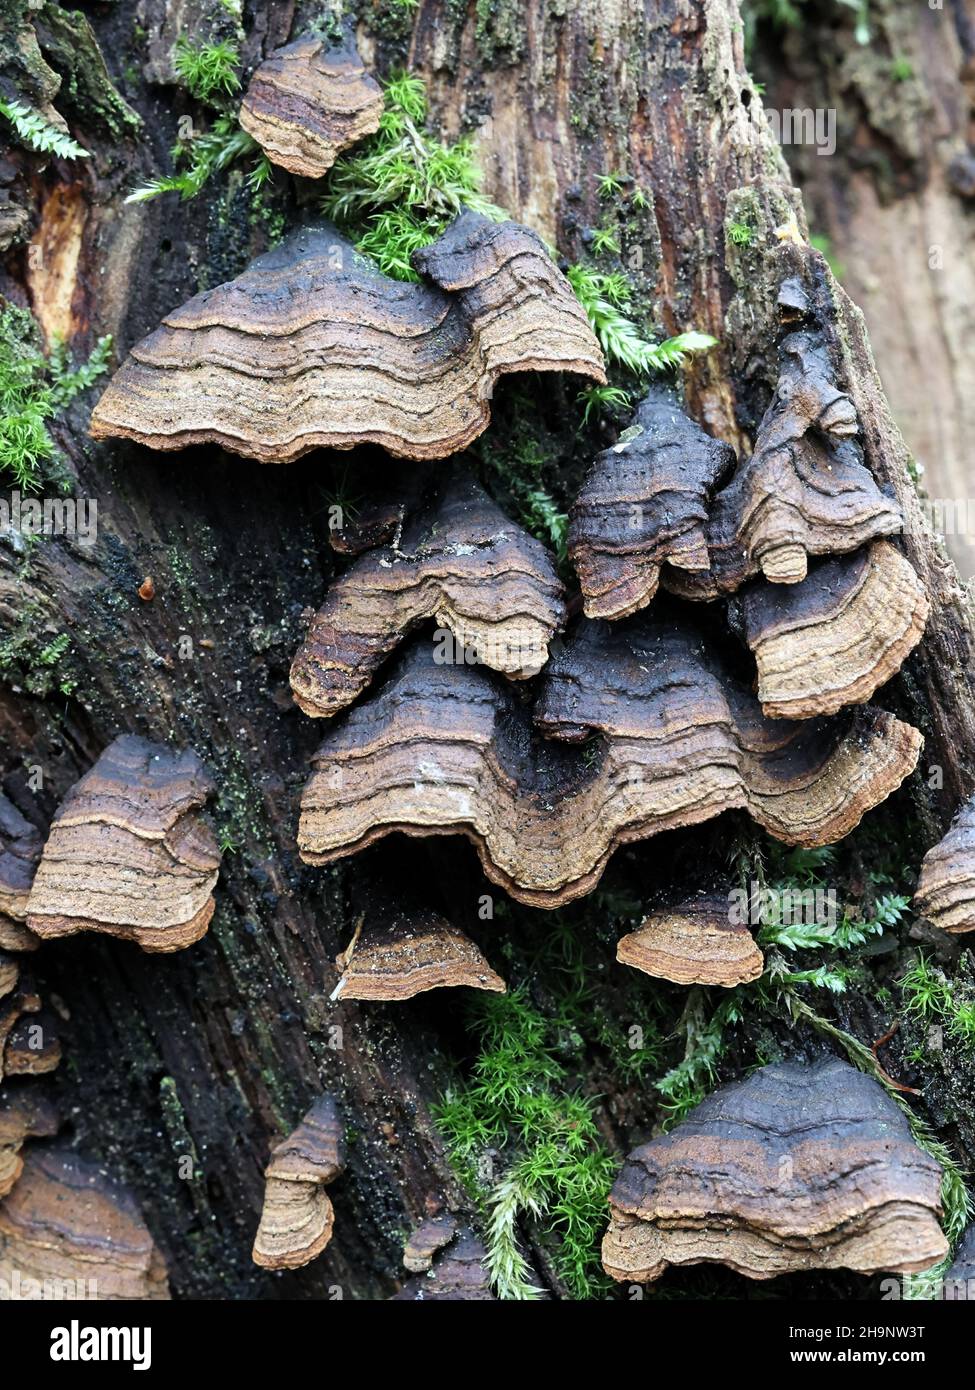 Hymenochaete rubiginosa, known as Oak Curtain Crust, wild fungus from Finland Stock Photo